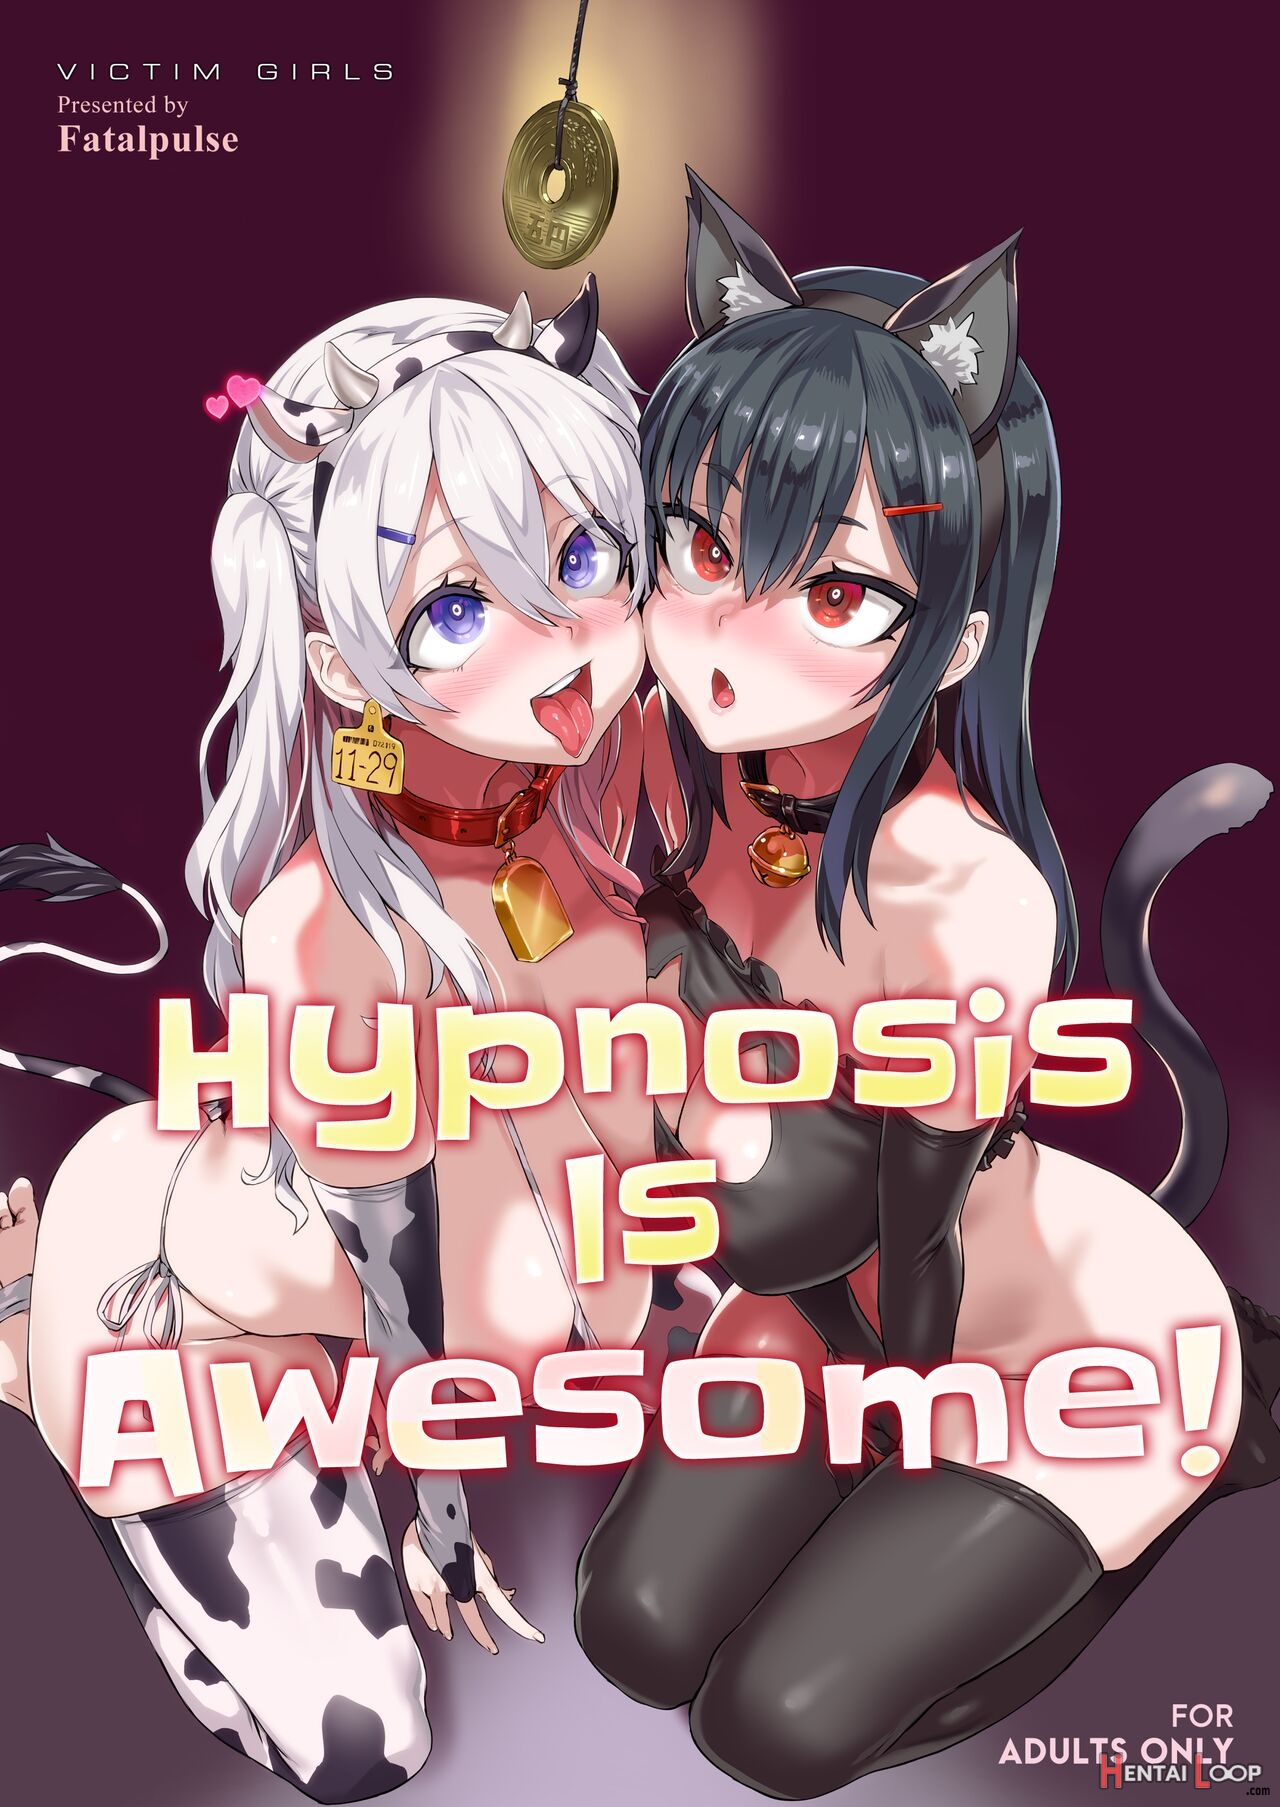 Hypnosis hrntai